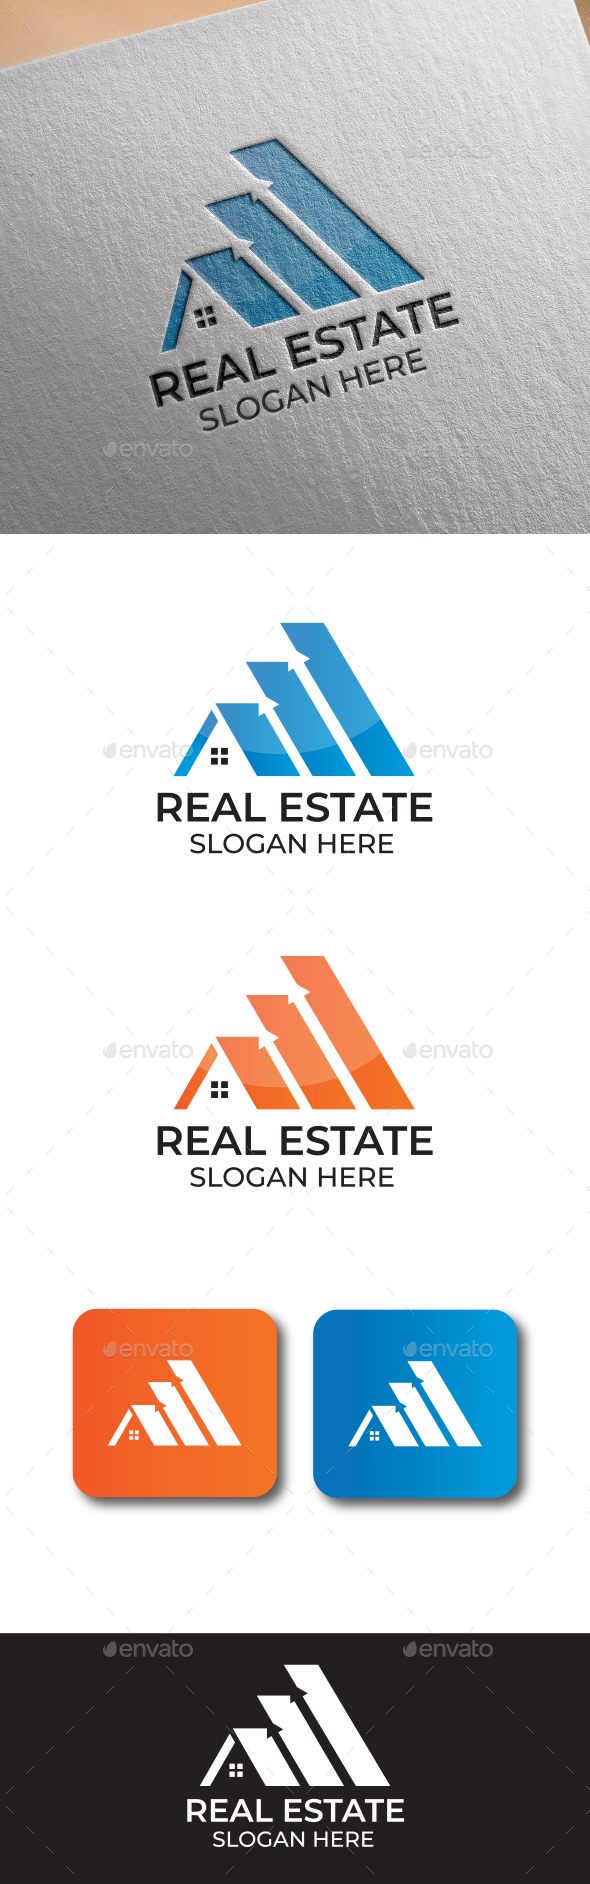 Real estate investment logo